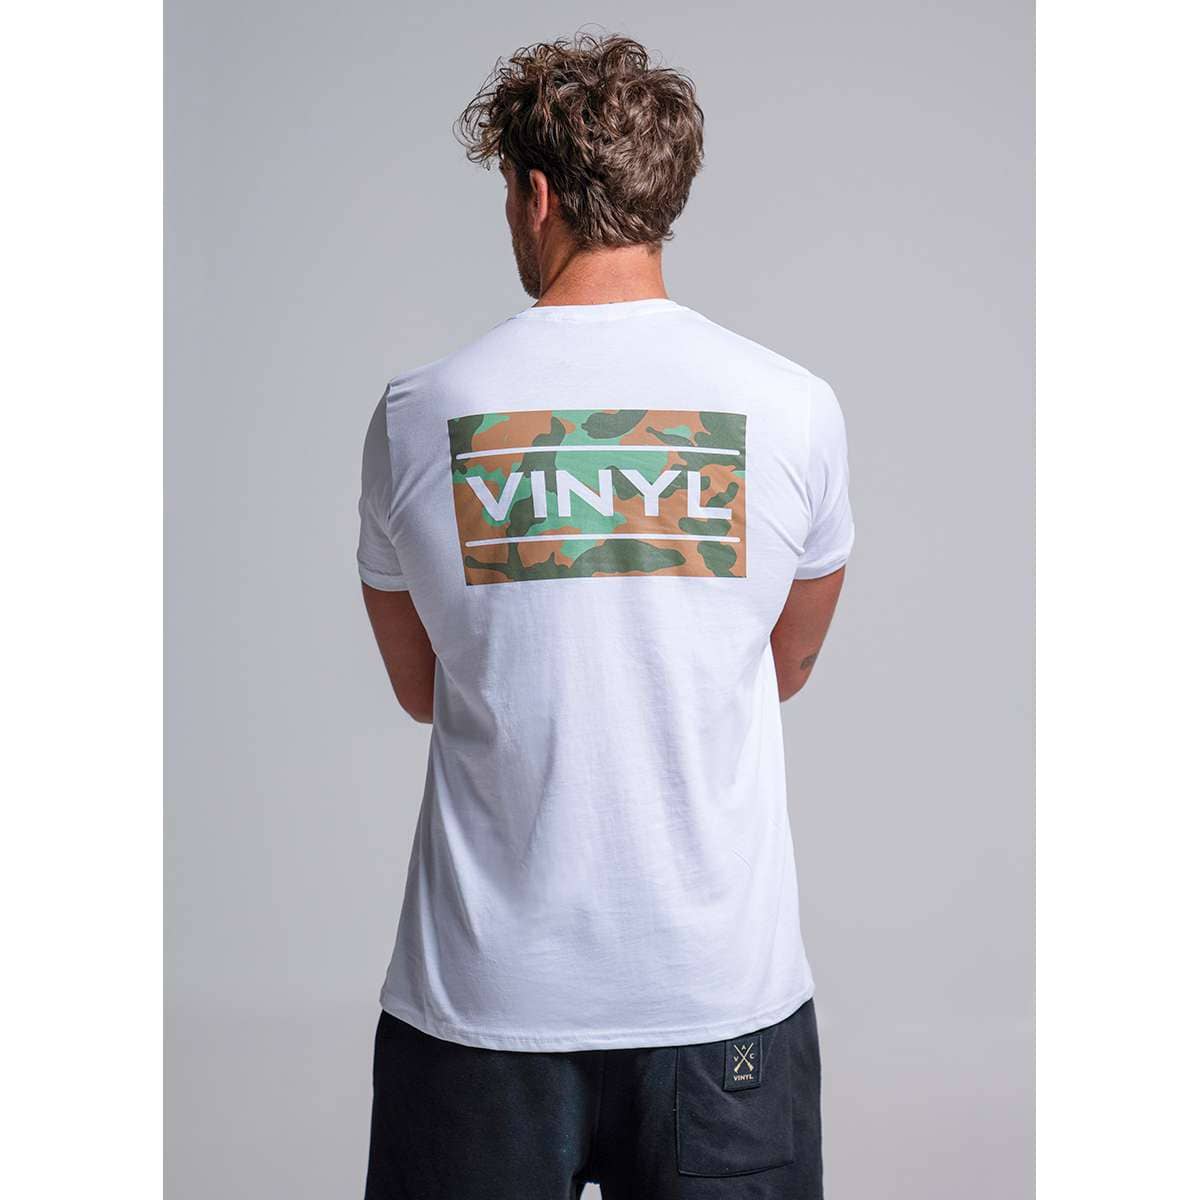 VINYL ART CLOTHING ARMY LOGO T-SHIRT 92524-02 WHITE